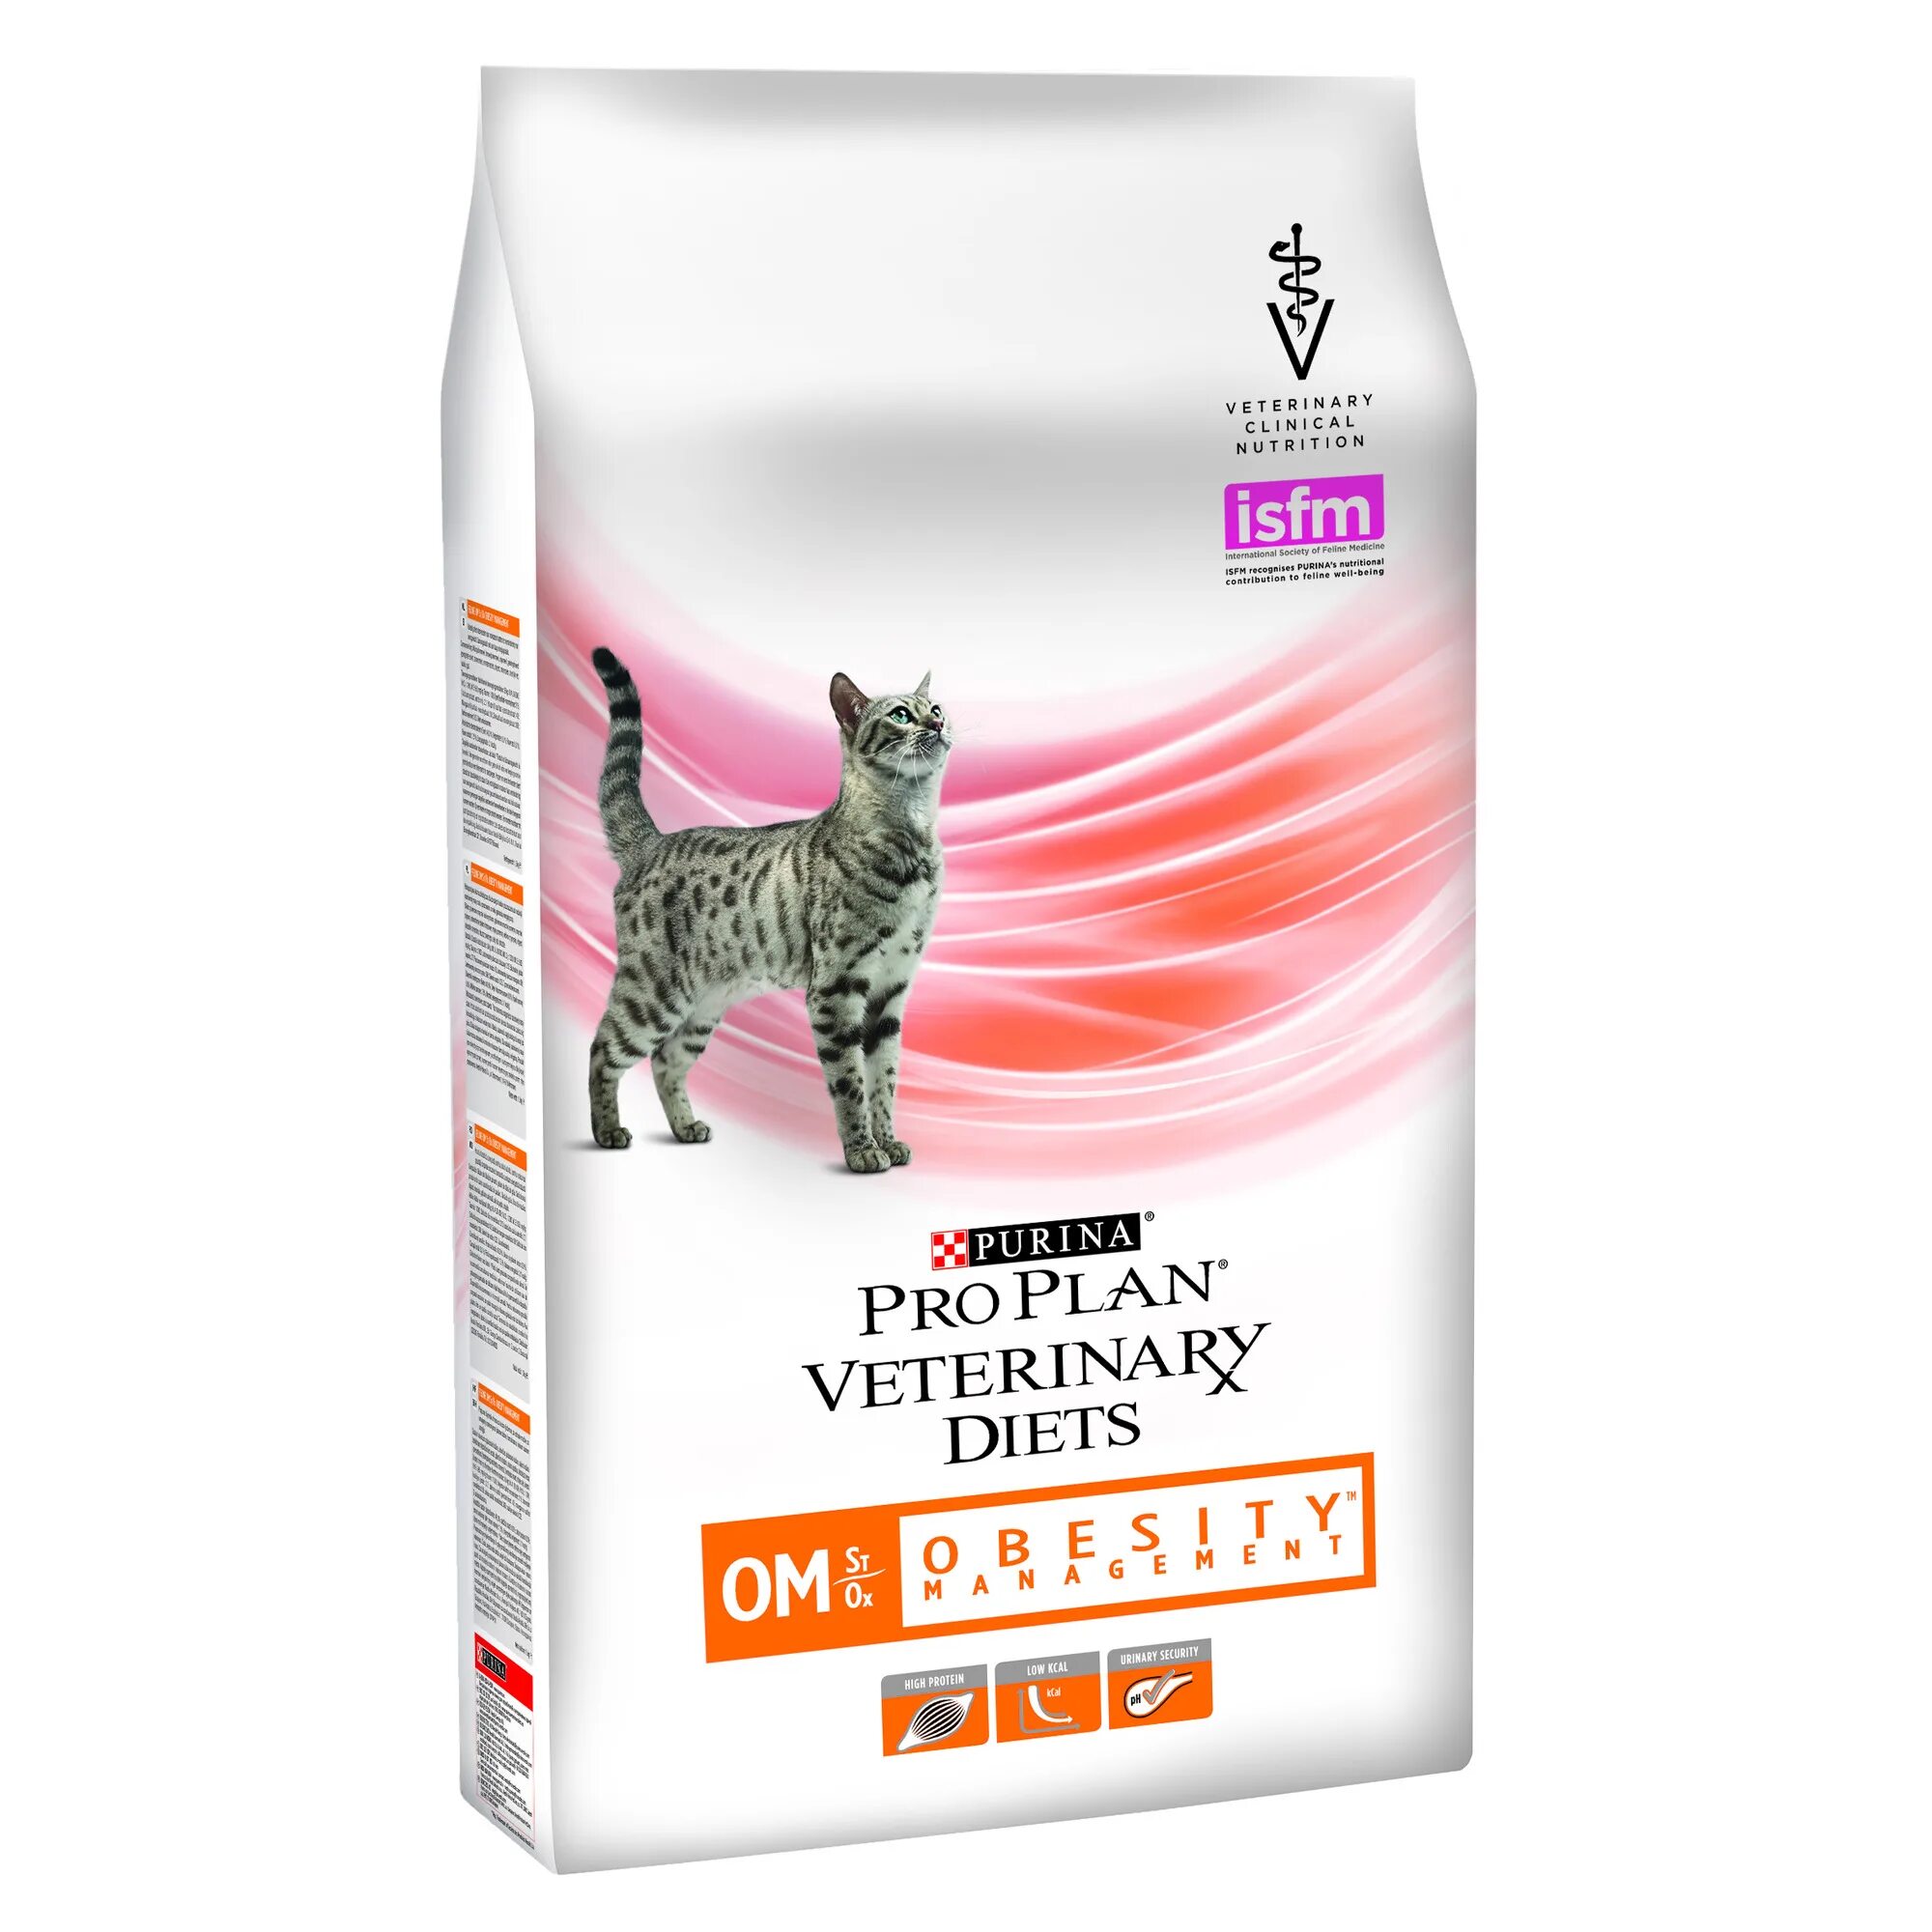 Purina Pro Plan Veterinary Diets ha Hypoallergenic для кошек. Сухой корм Уринари Проплан 1.5 кг. Pro Plan Veterinary Diets корм сухой Urinary для кошек 1.5 кг. Pro plan почки